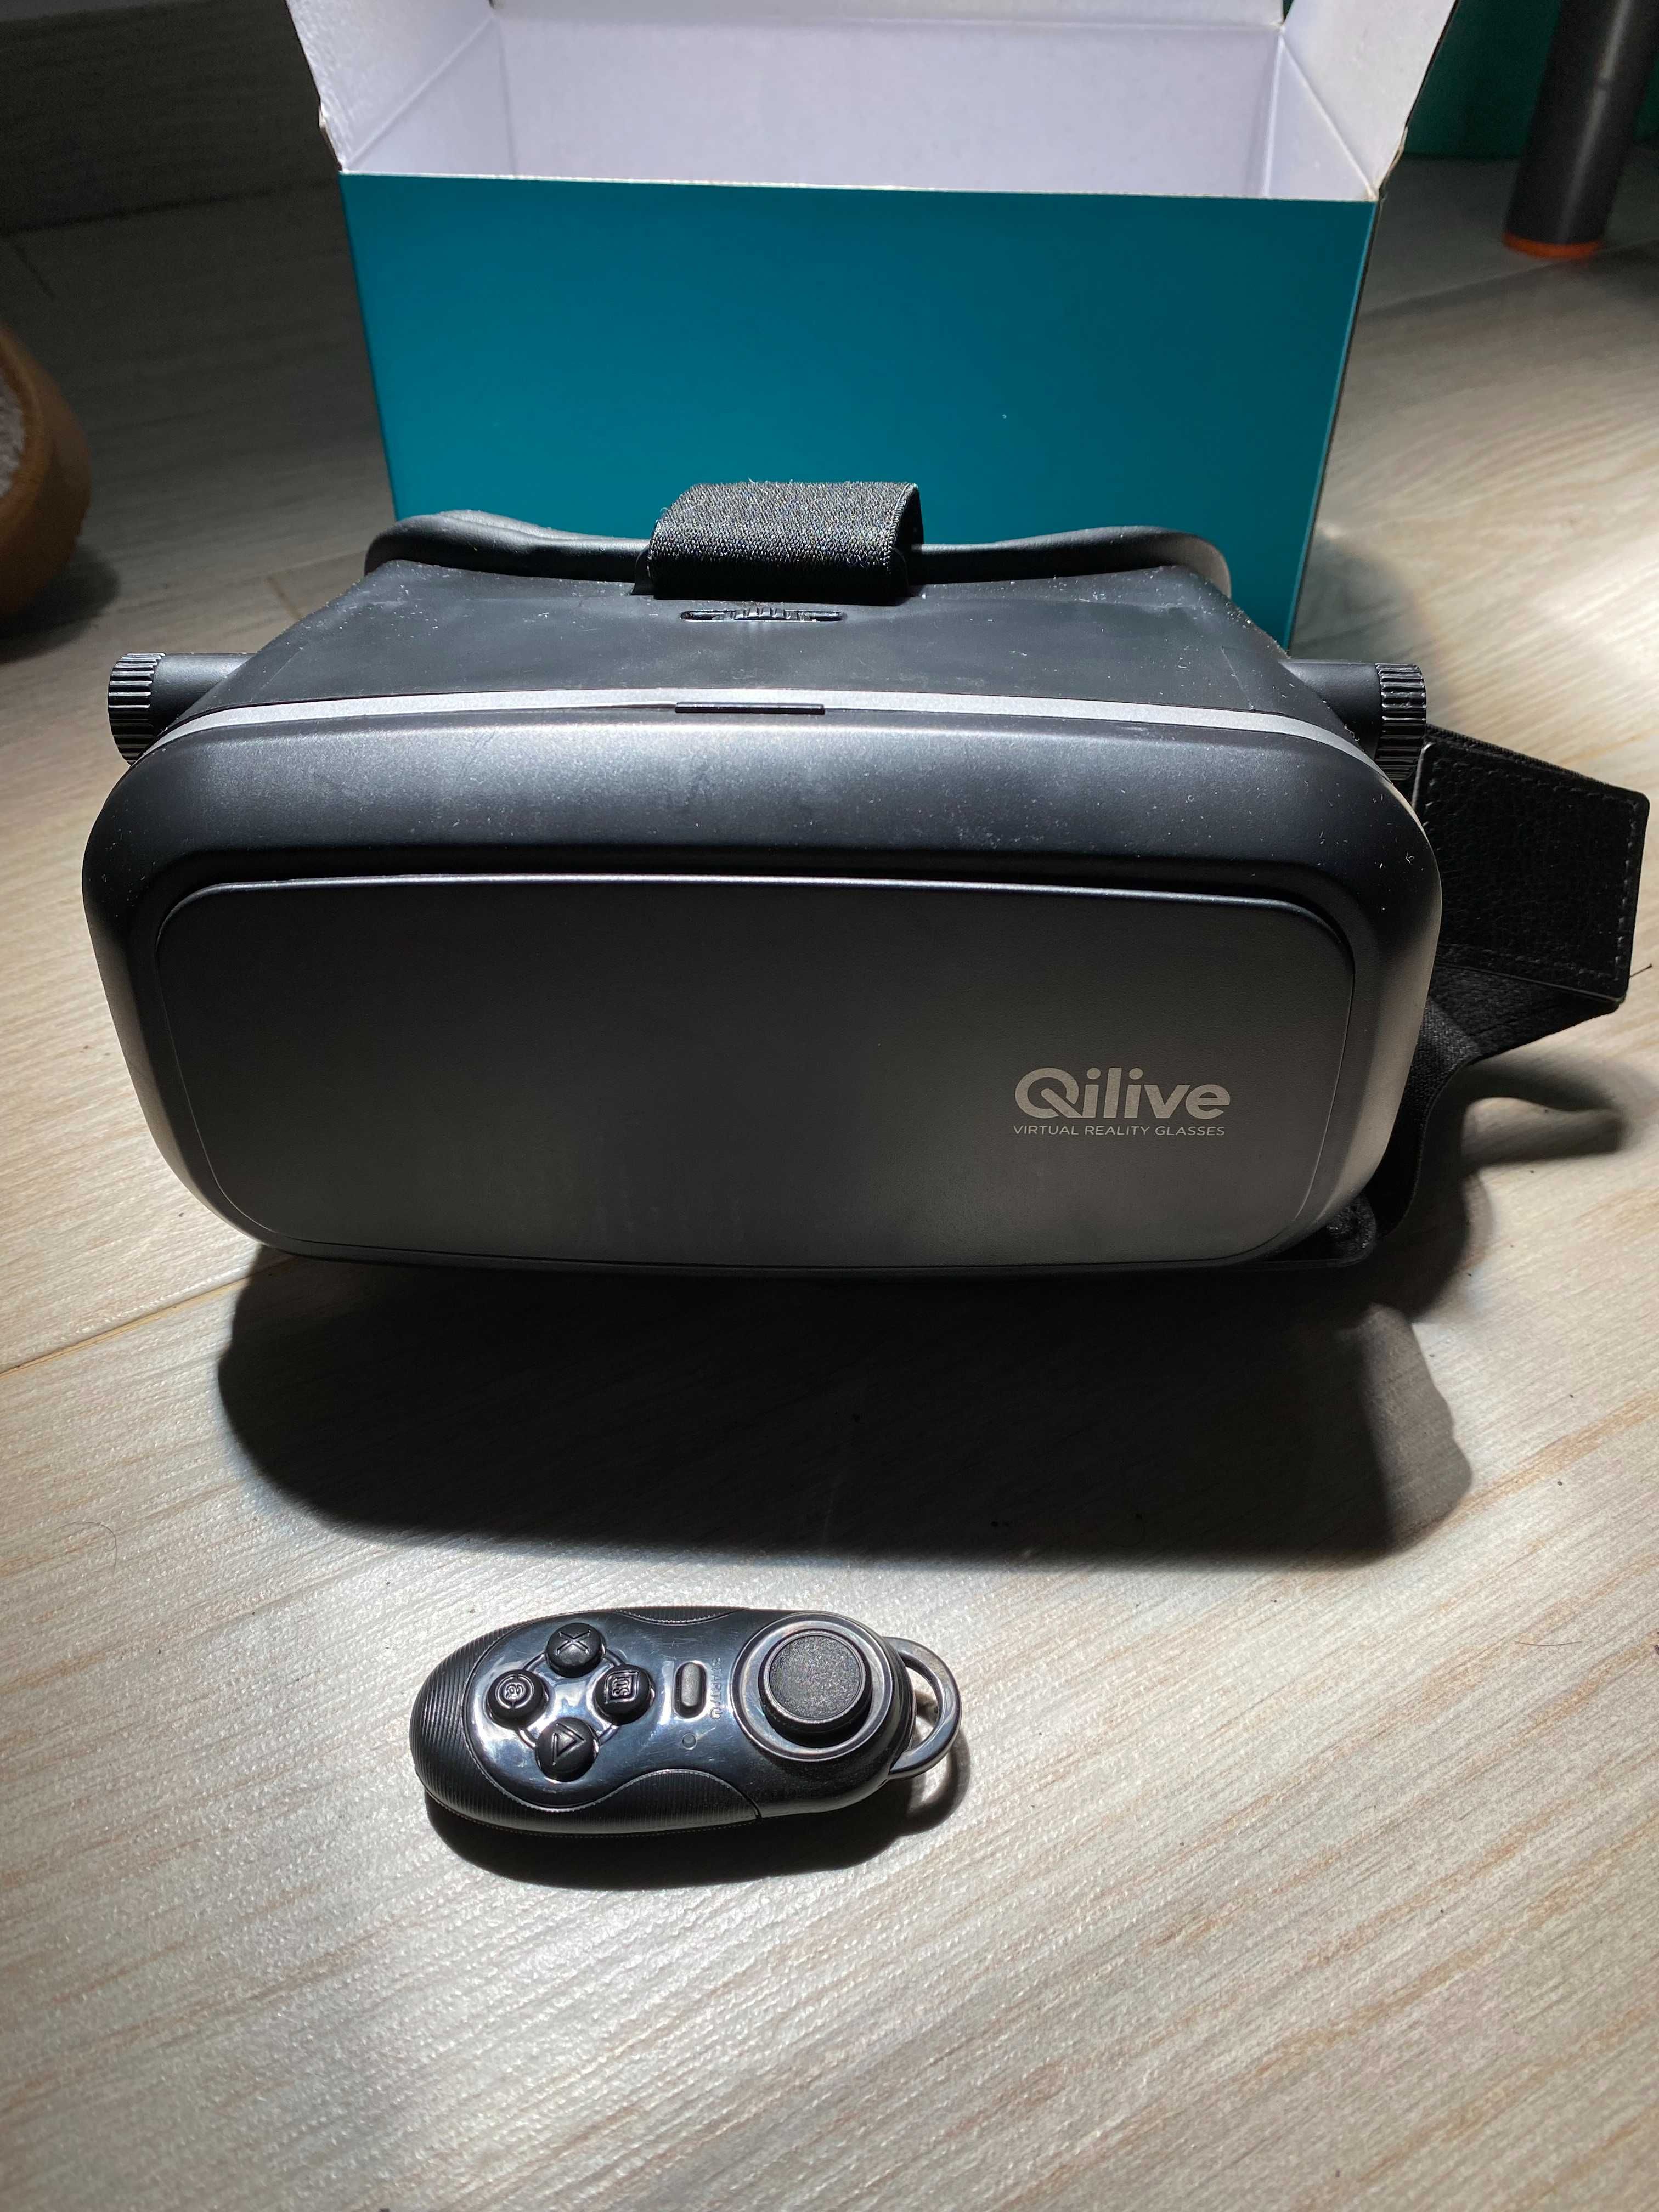 Óculos VR para telemóvel Qilive